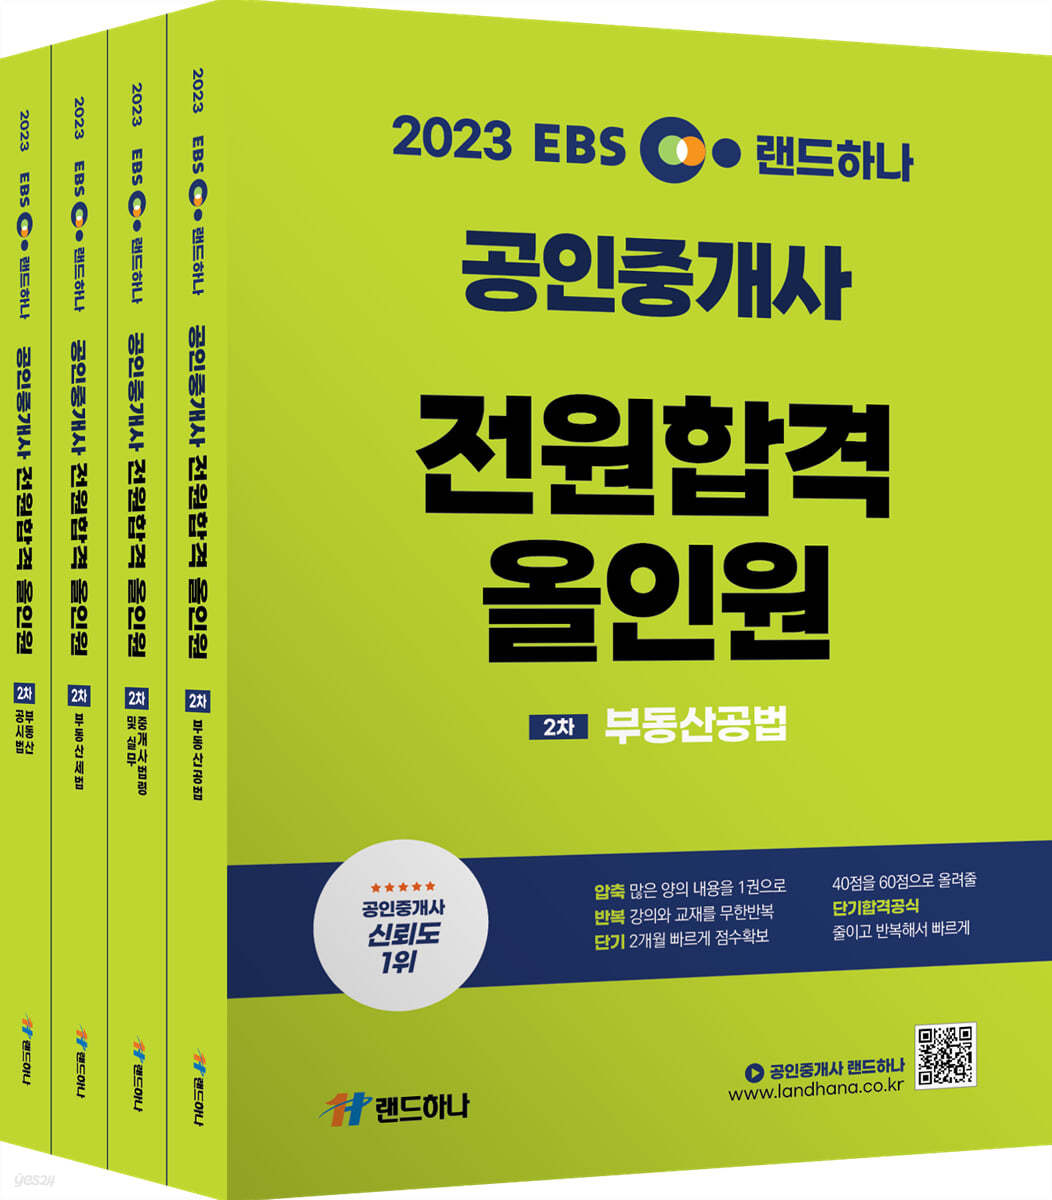 2023 EBS 랜드하나 공인중개사 전원합격 올인원 2차세트